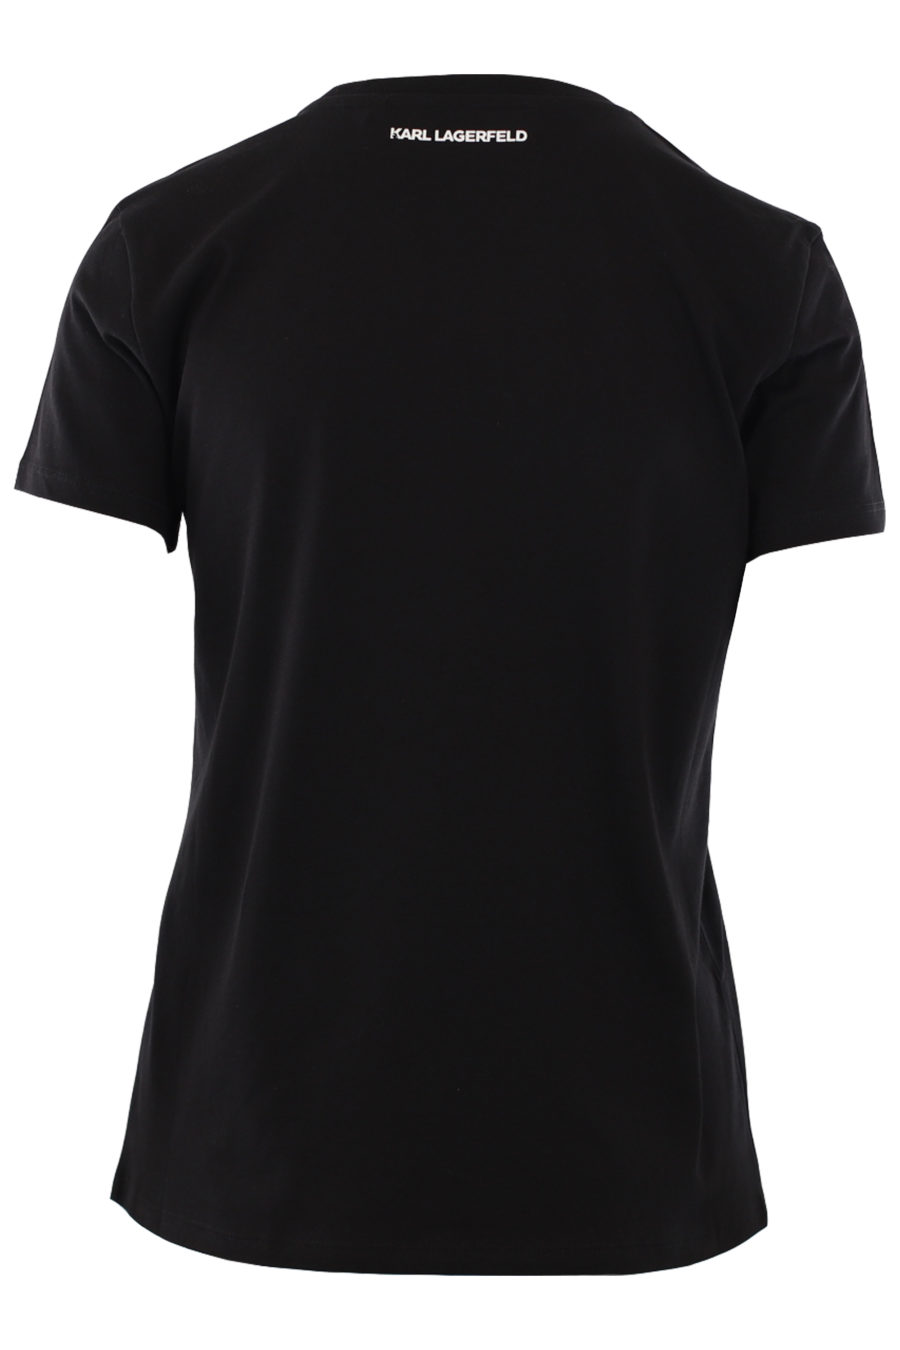 Camiseta negra con logo "karl" multicolor de goma - IMG 0822